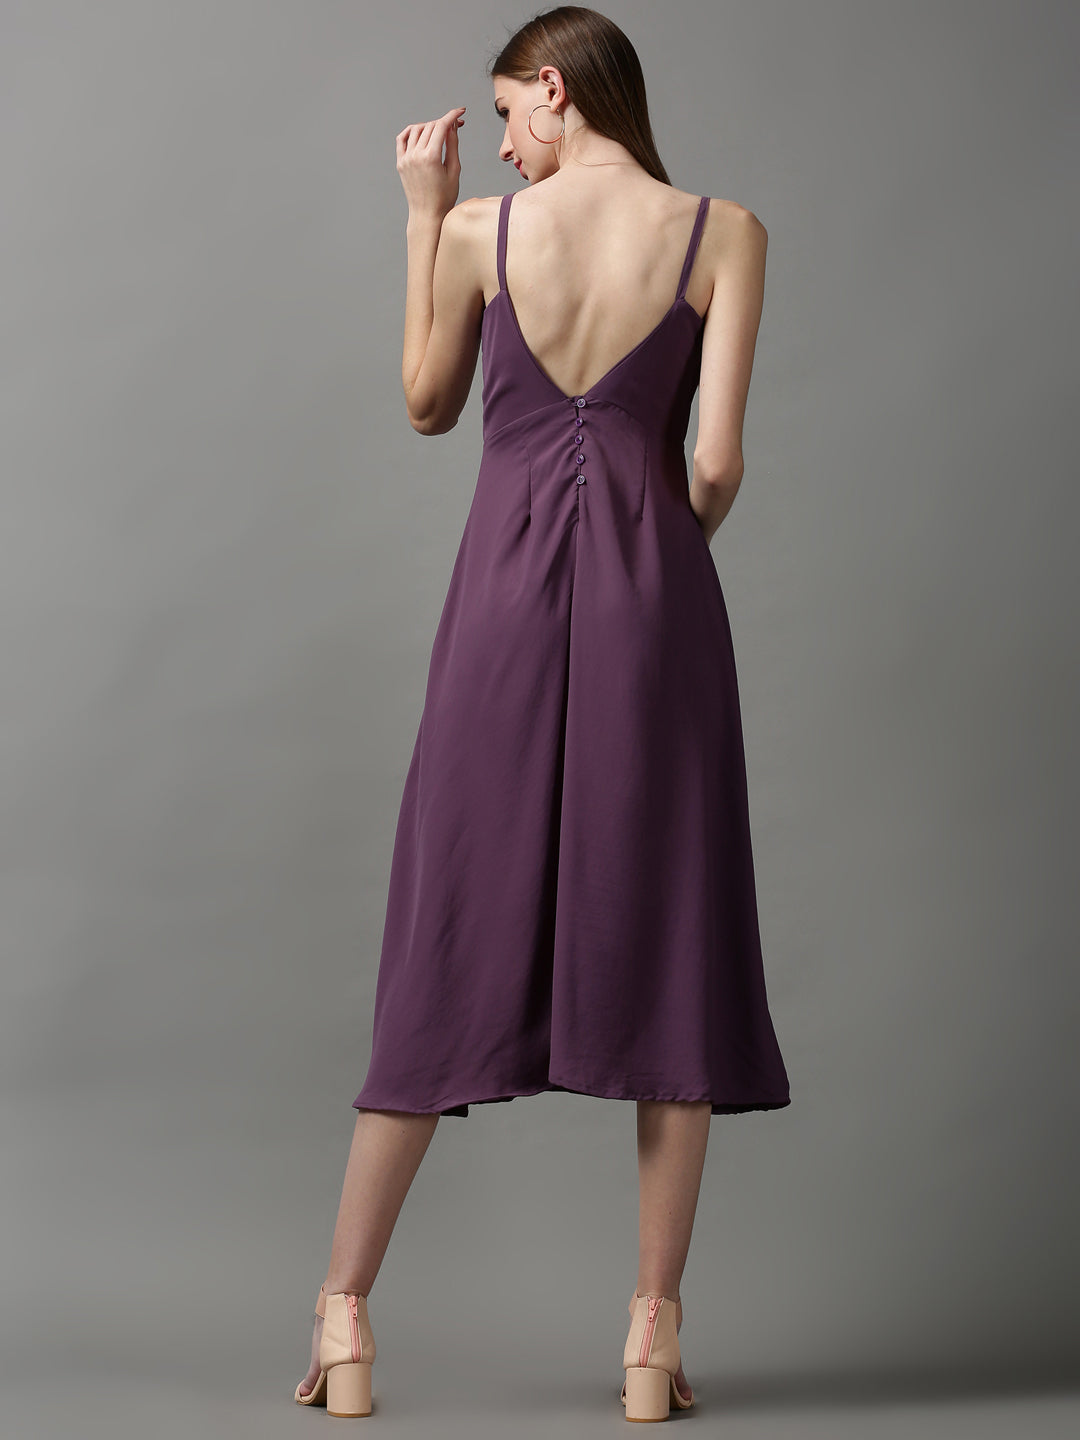 Women's Violet Solid A-Line Dress